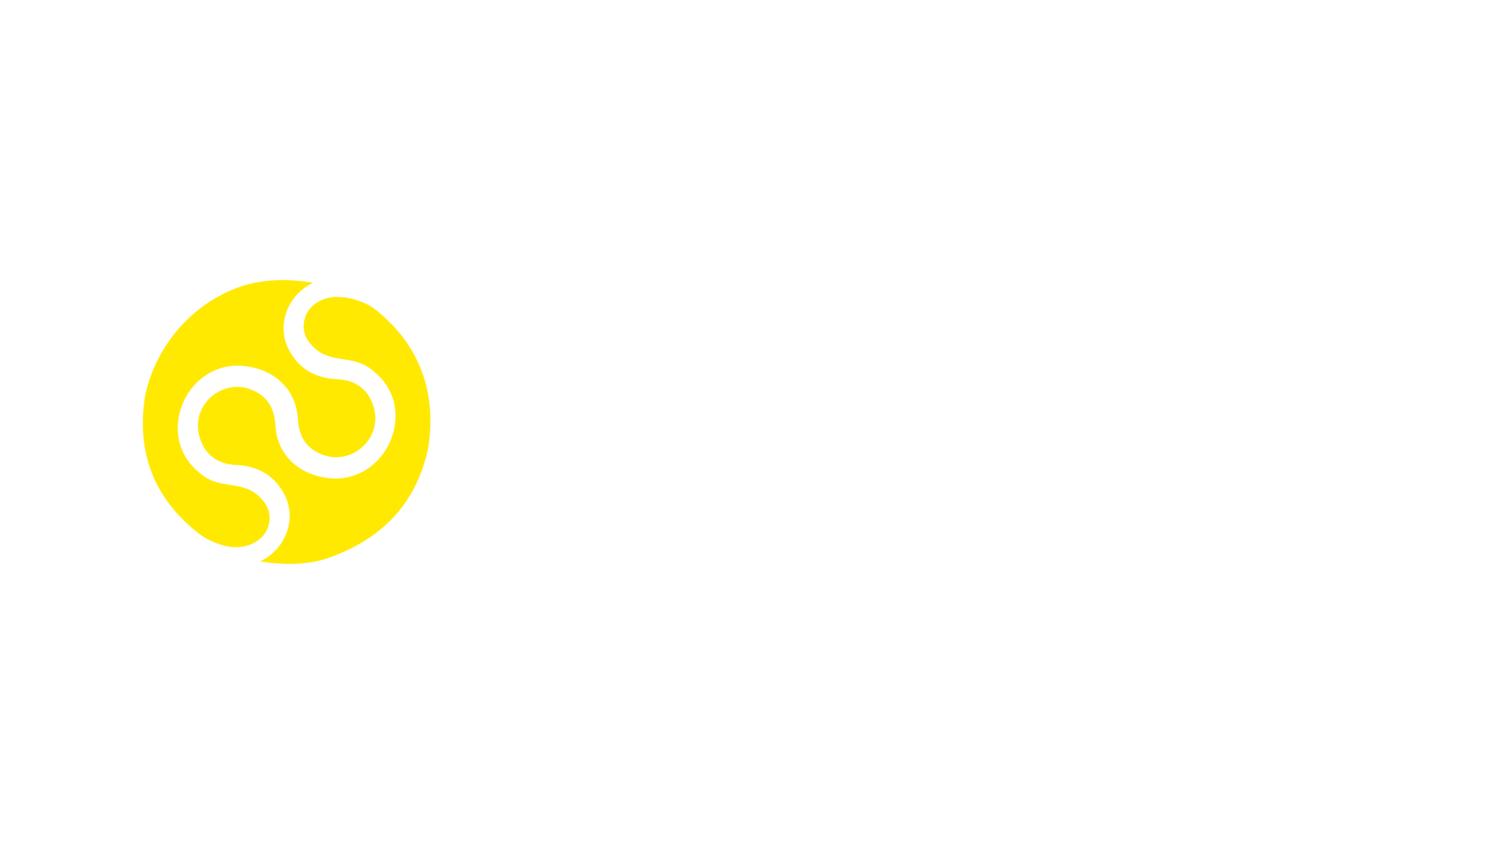 Allied Esports